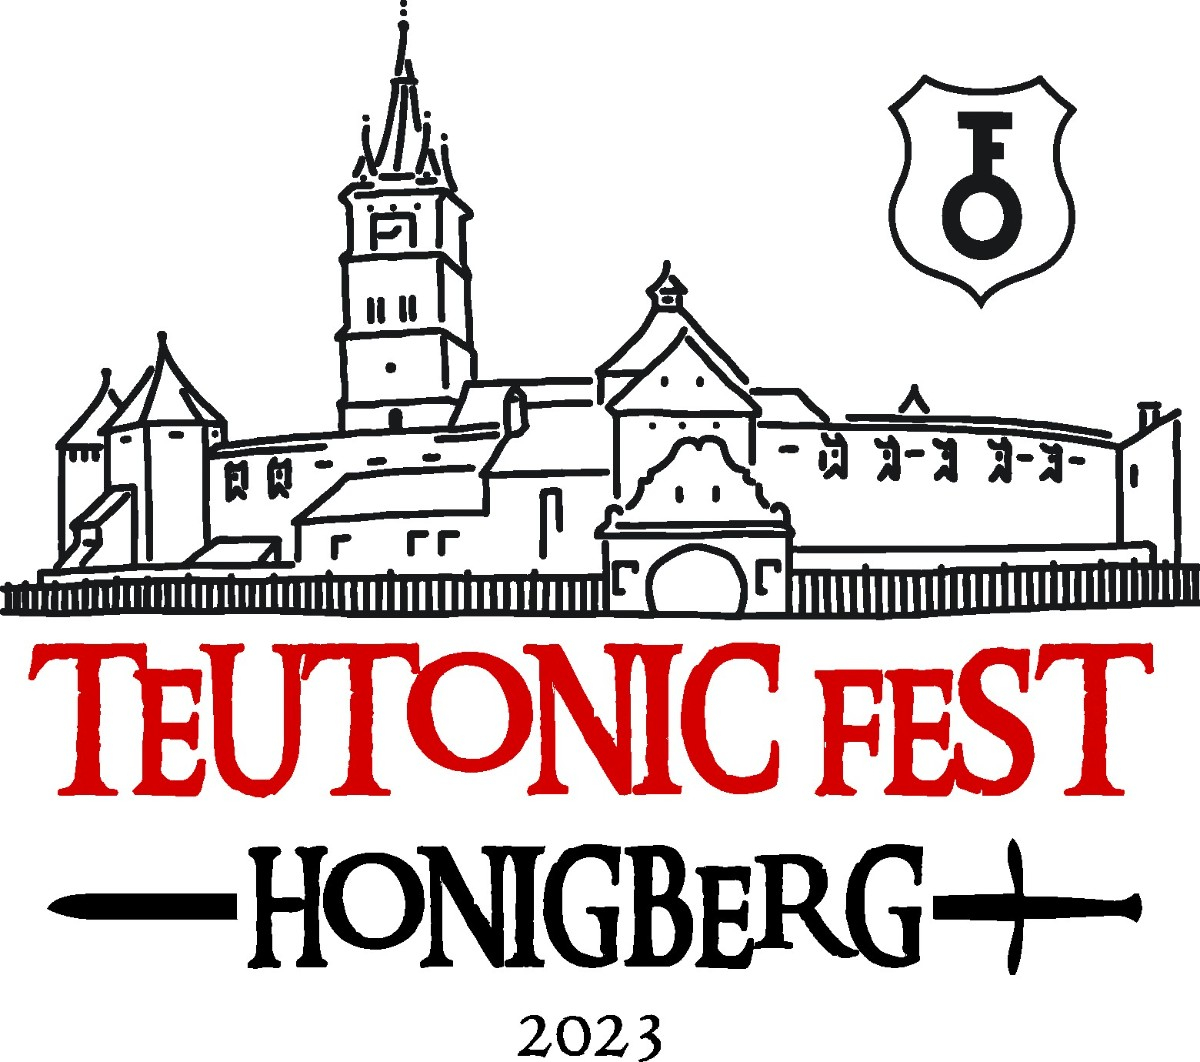 Teutonic Fest 2023 Honigberg - Harman